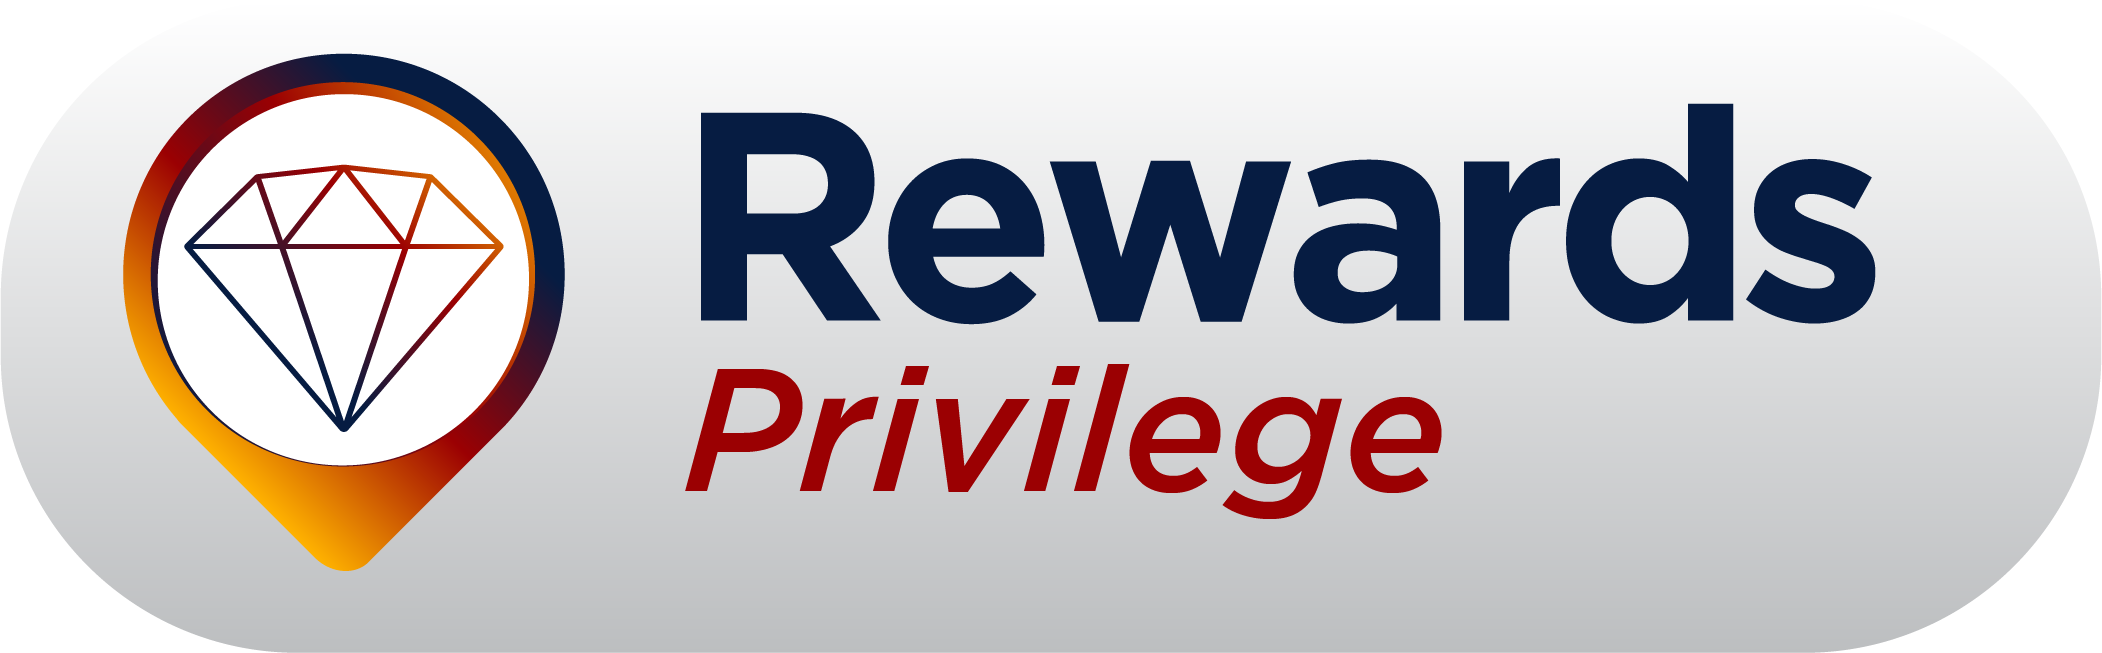 REWARDS PRIVILEGES